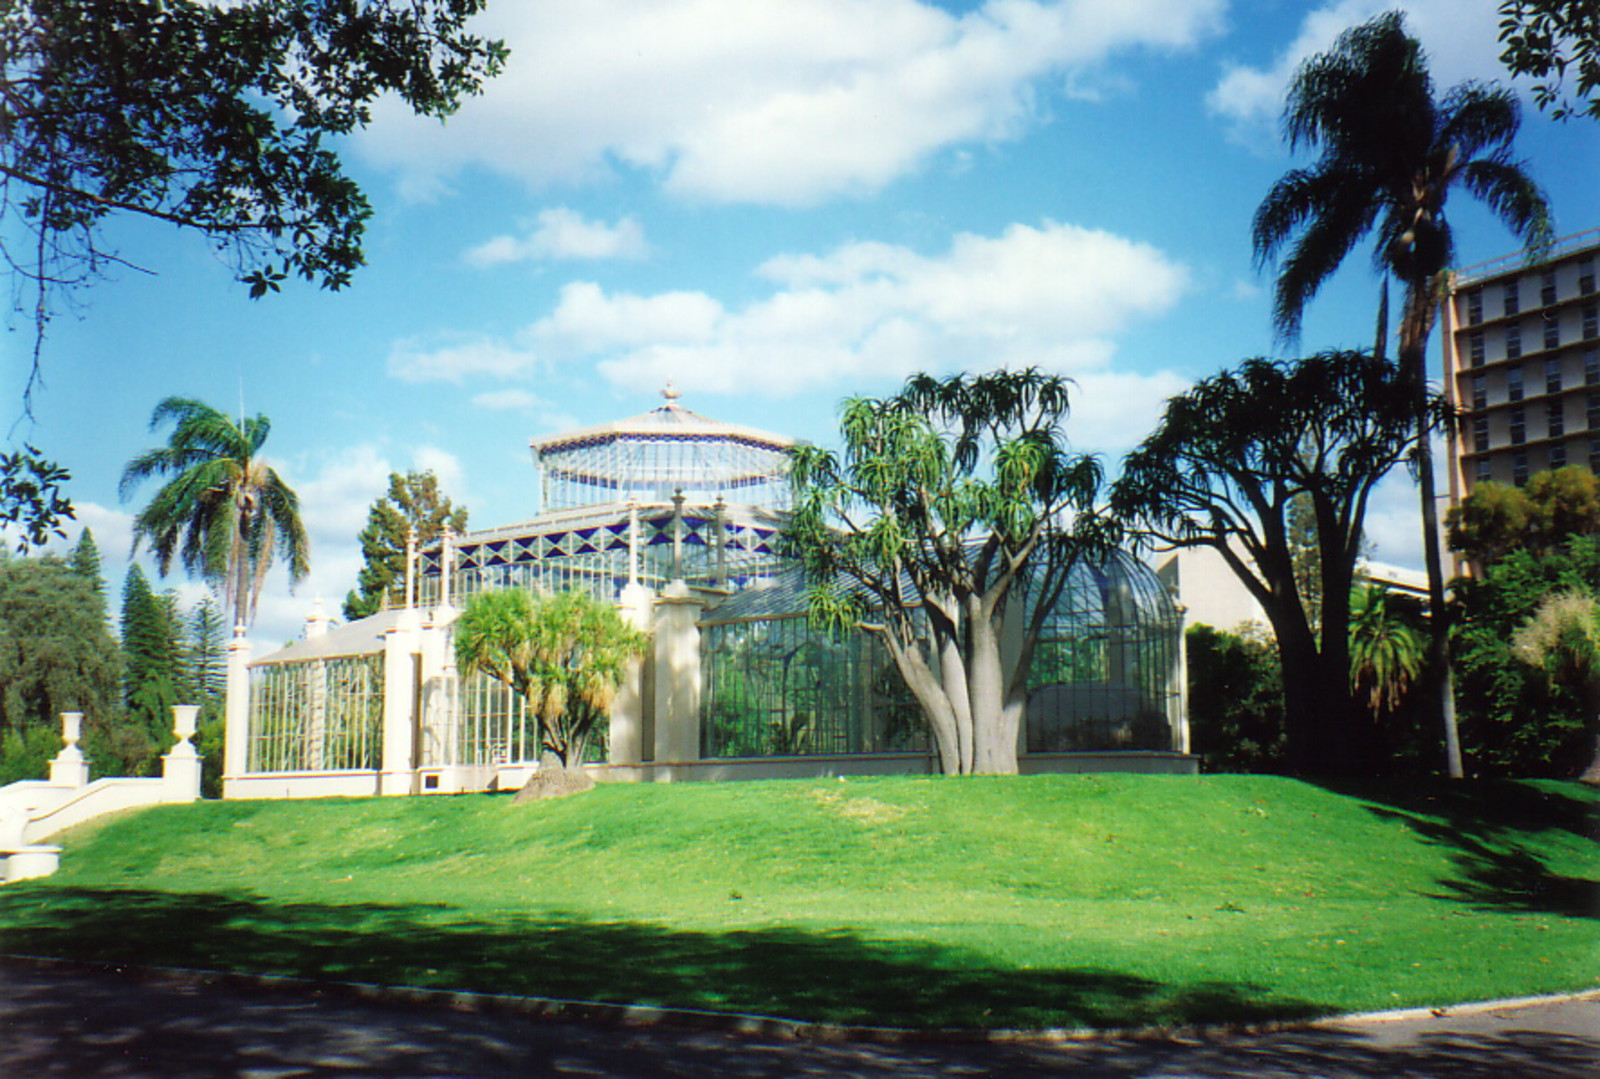 Adelaide's pretty botanic gardens